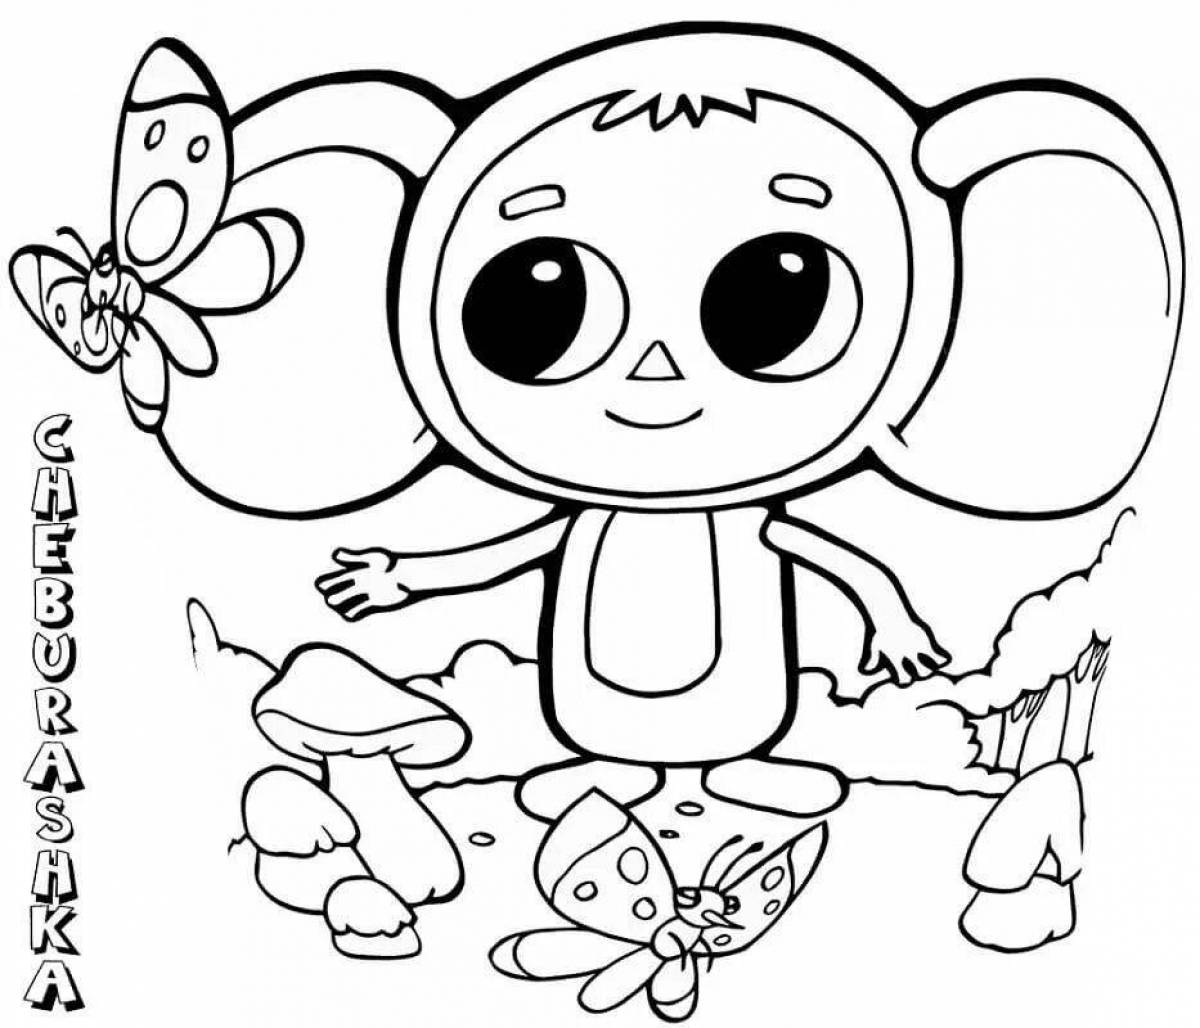 A witty drawing of Cheburashka